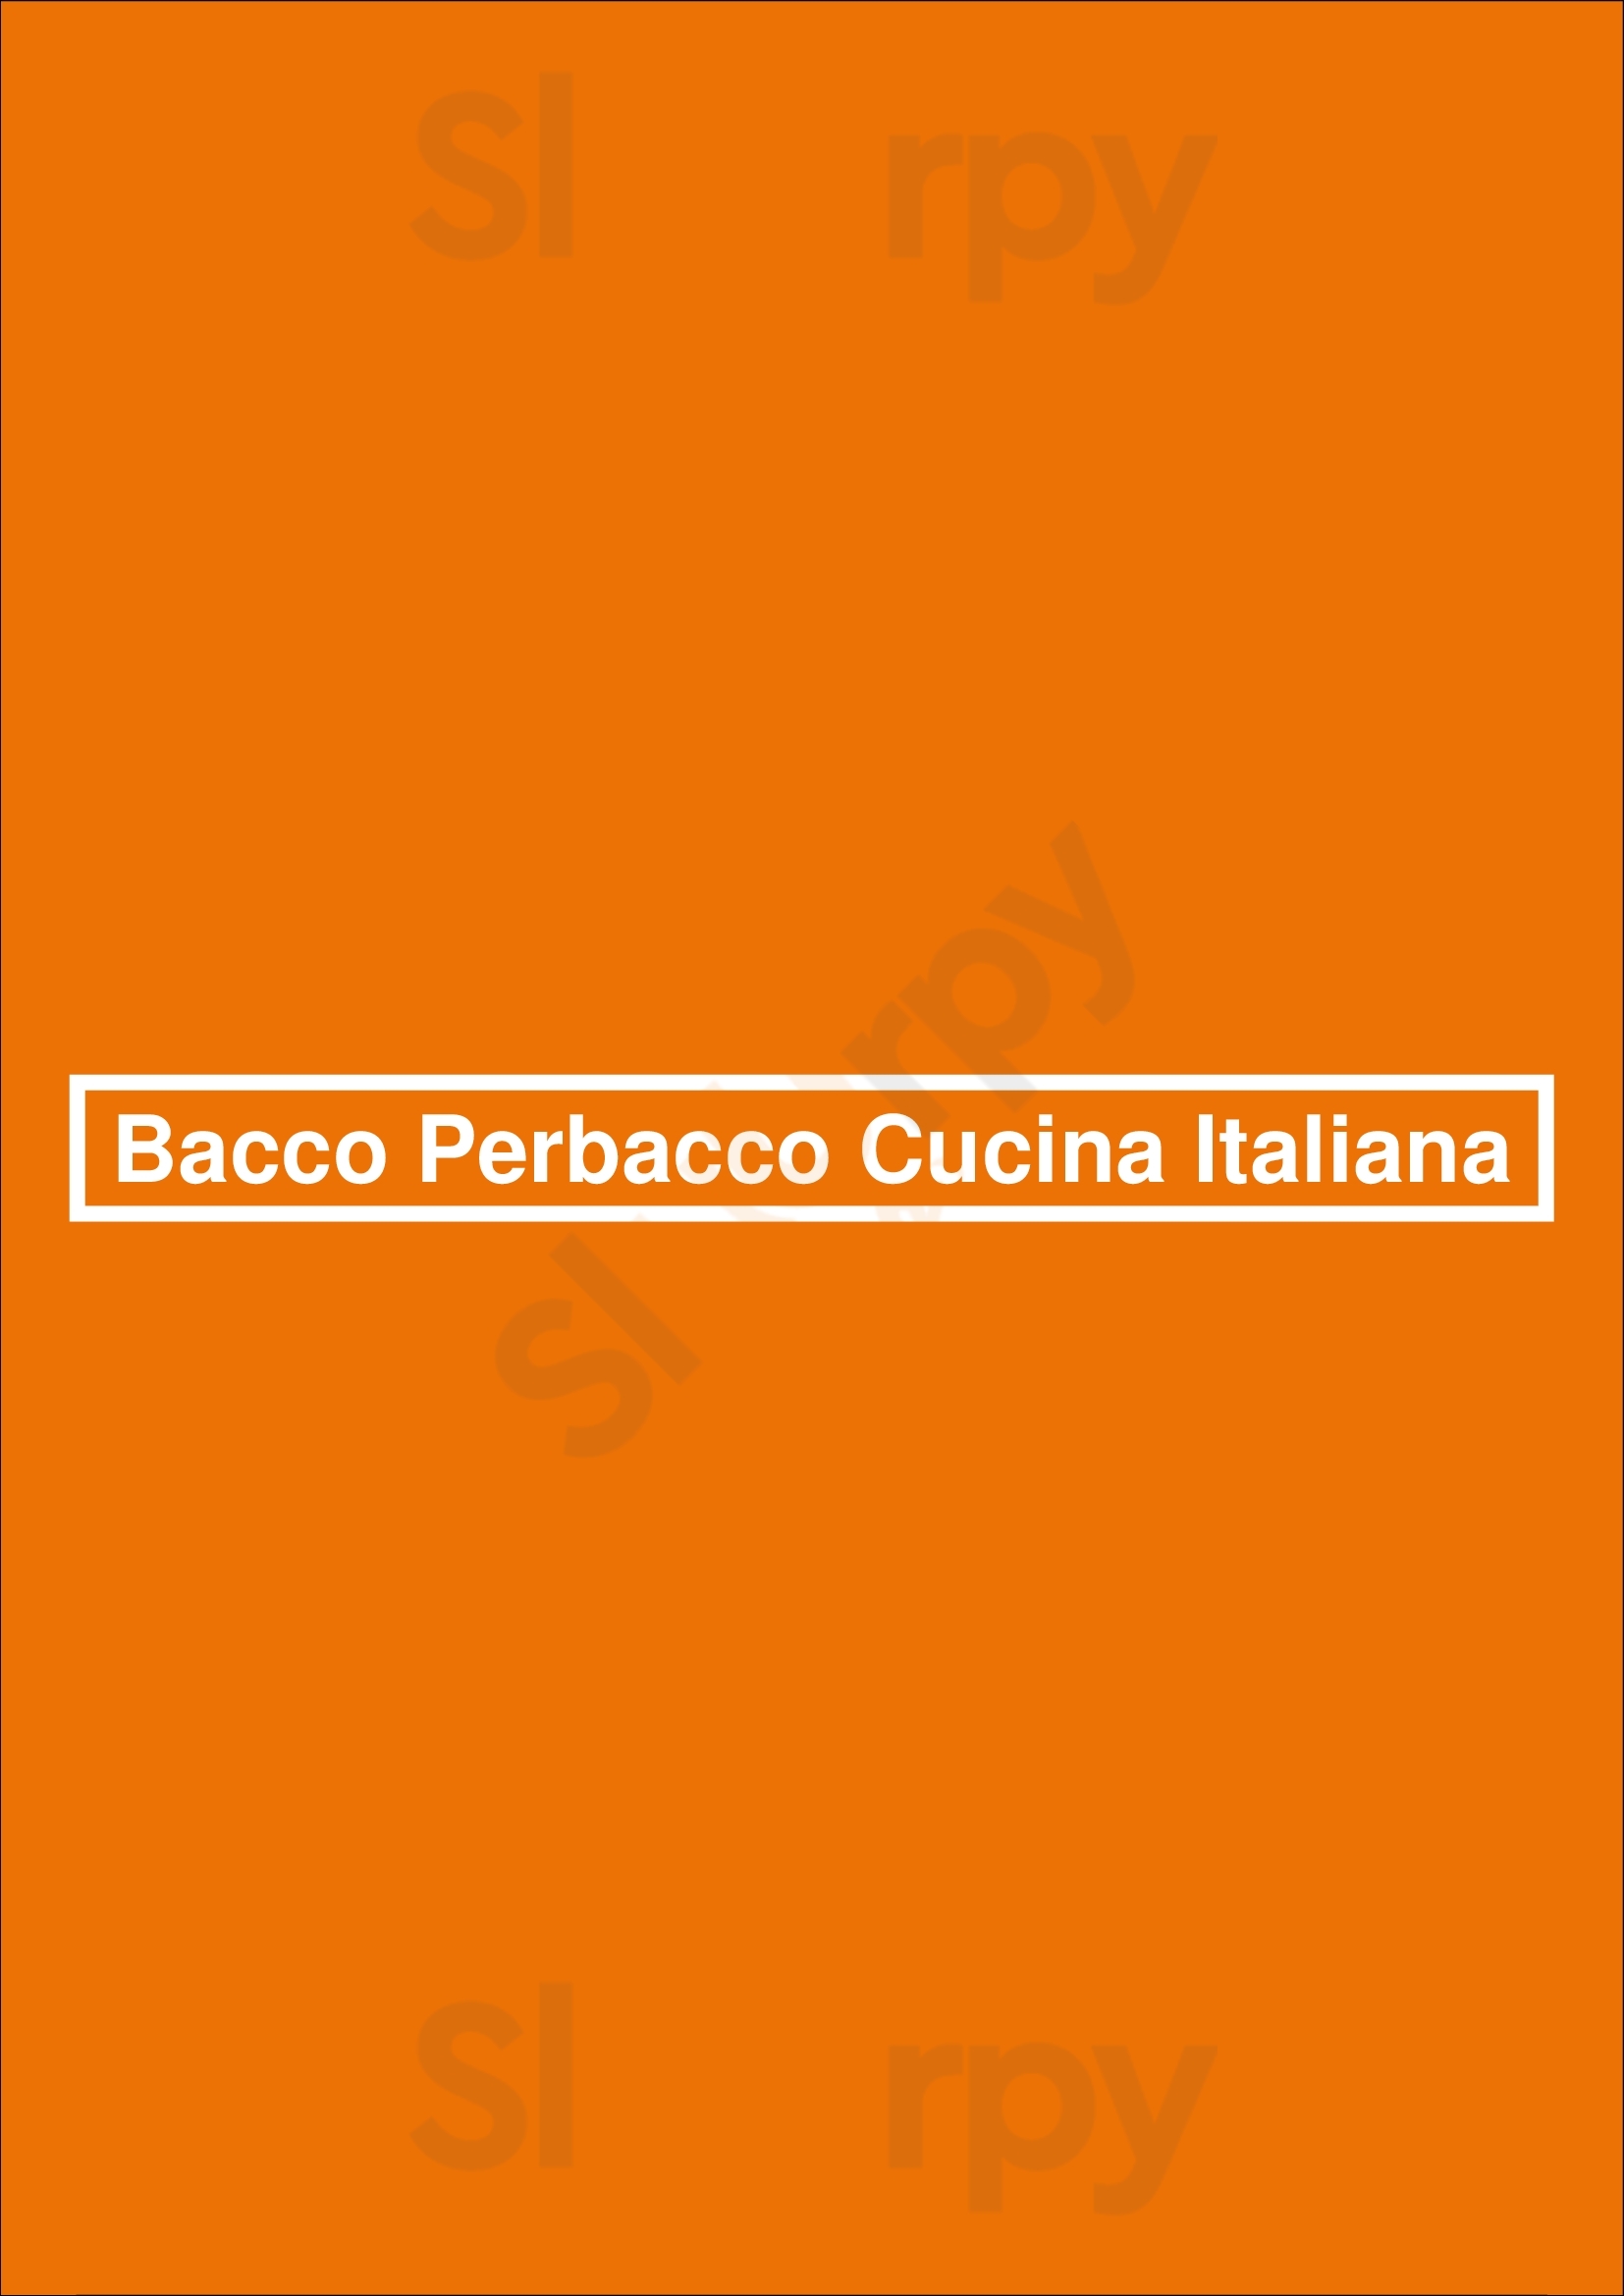 Bacco Perbacco Cucina Italiana Den Haag Menu - 1